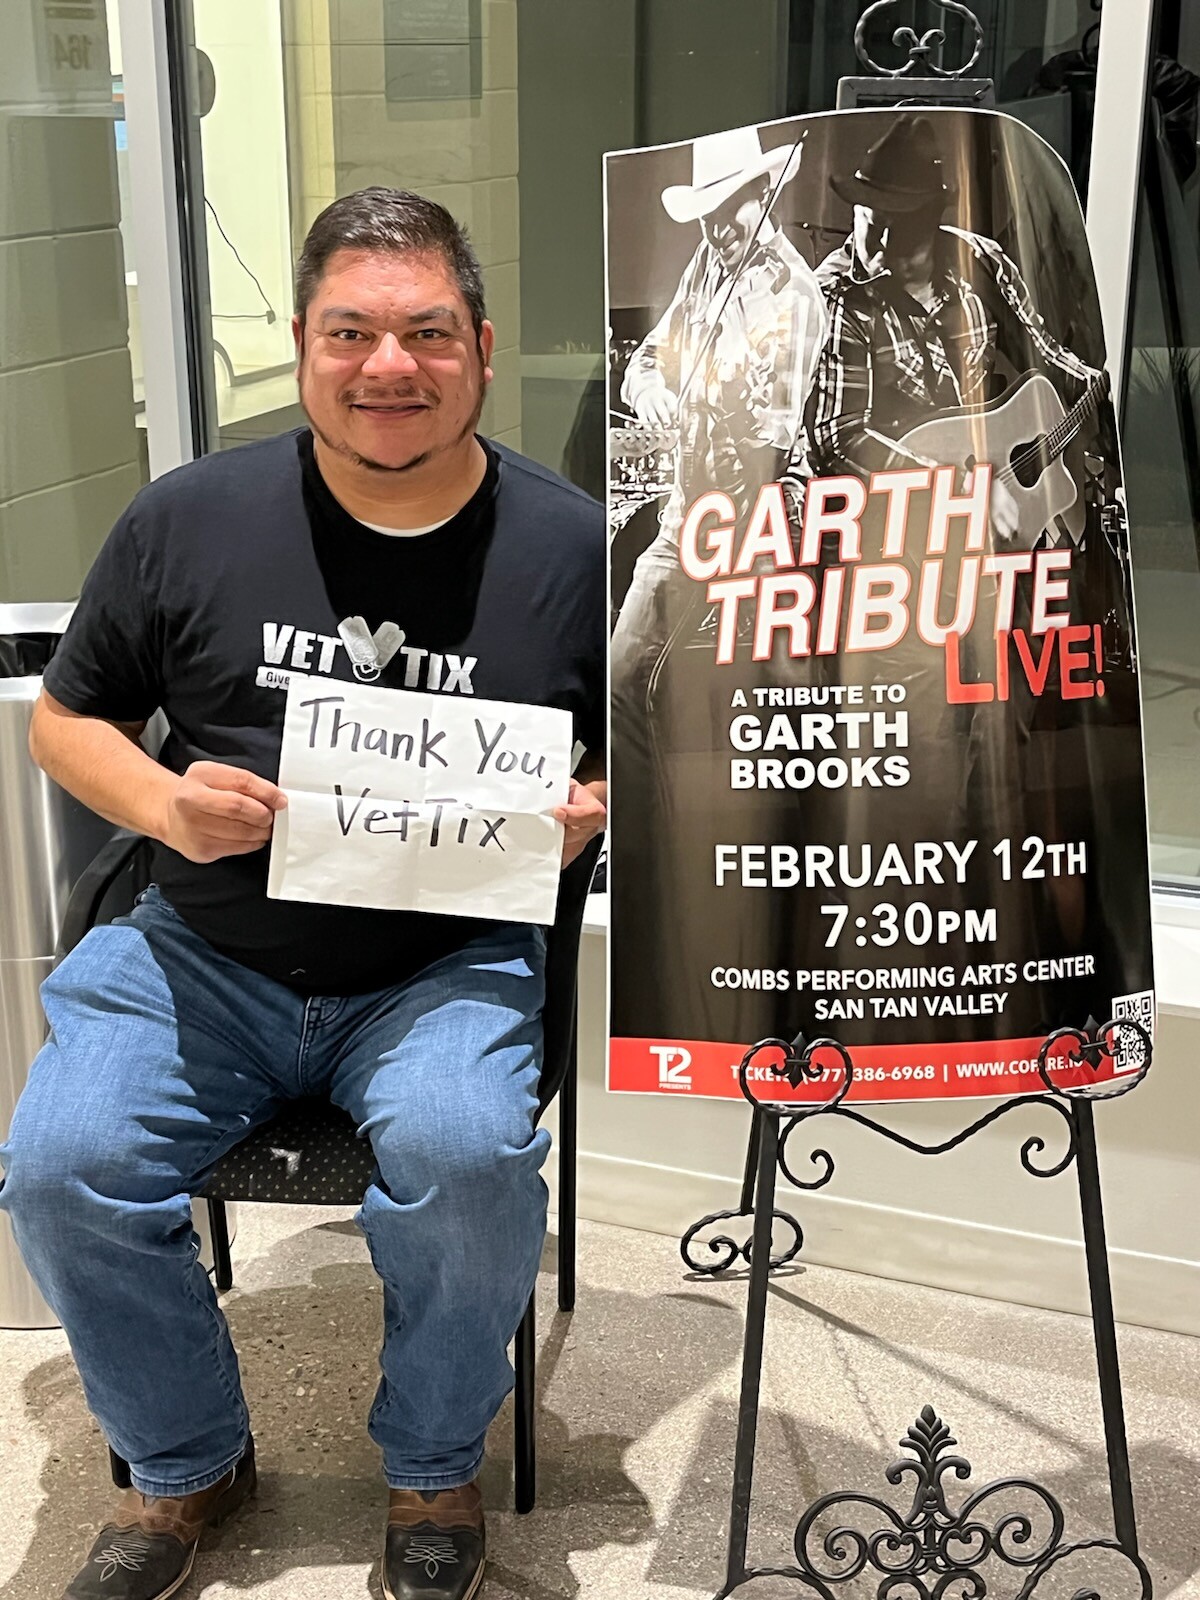 Garth Live-Tribute to Garth Brooks